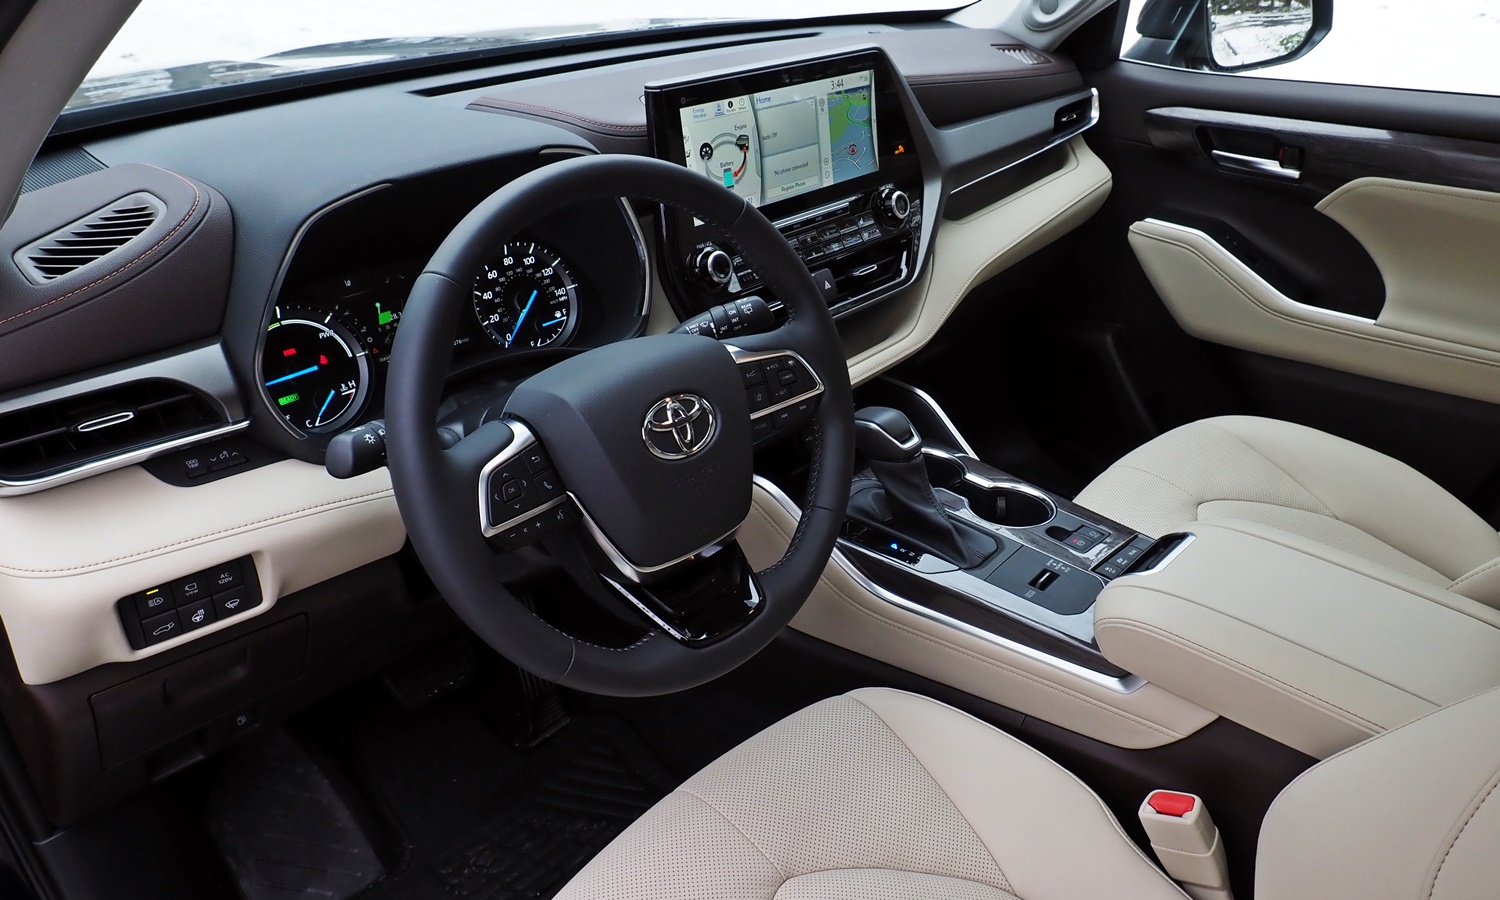 Toyota Highlander Photos: Toyota Highlander Hybrid interior